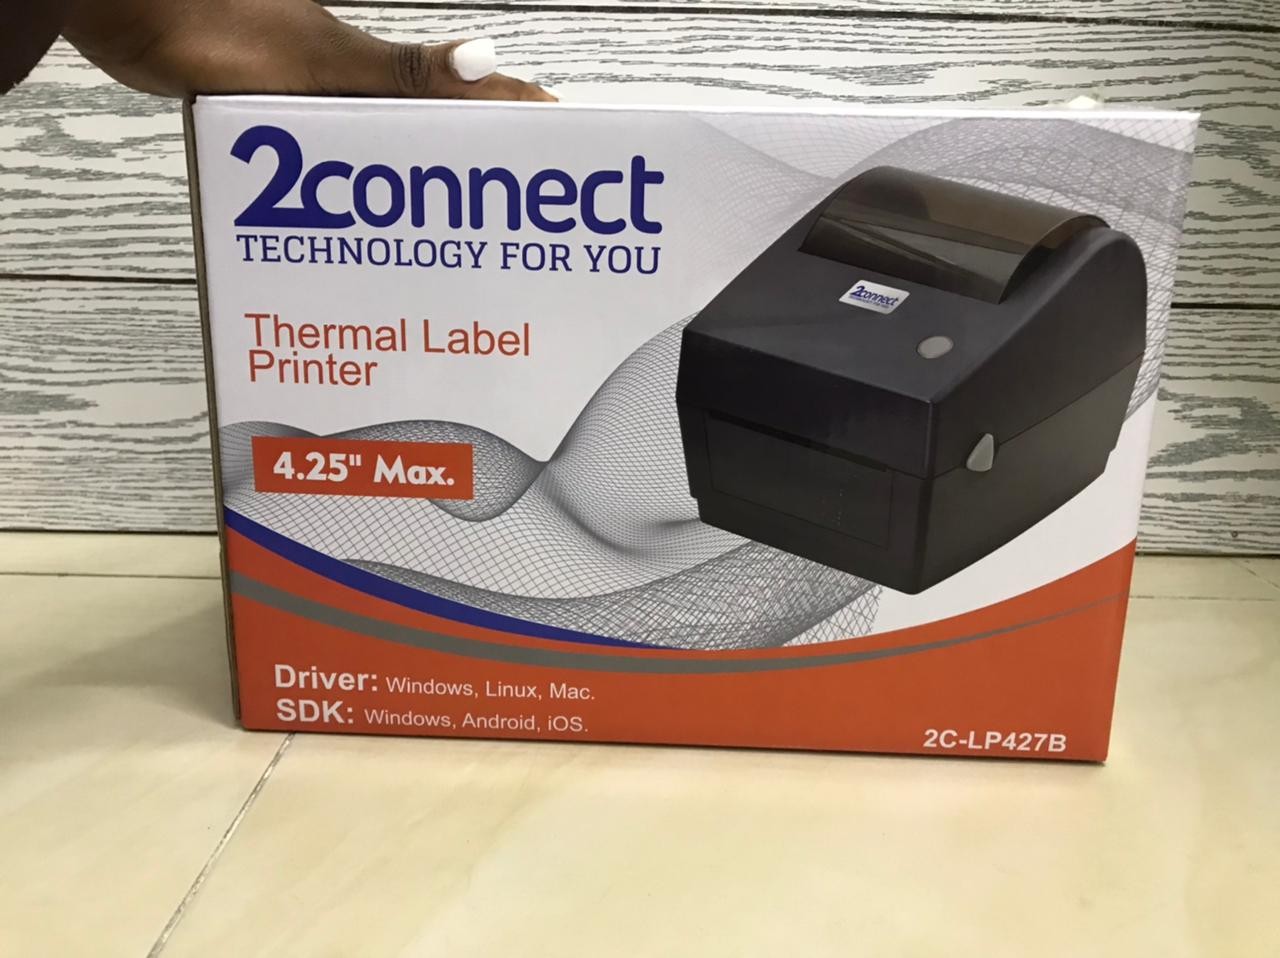 impresoras y scanners - Impresora Térmica de label etiquetas similar a la zebra 3